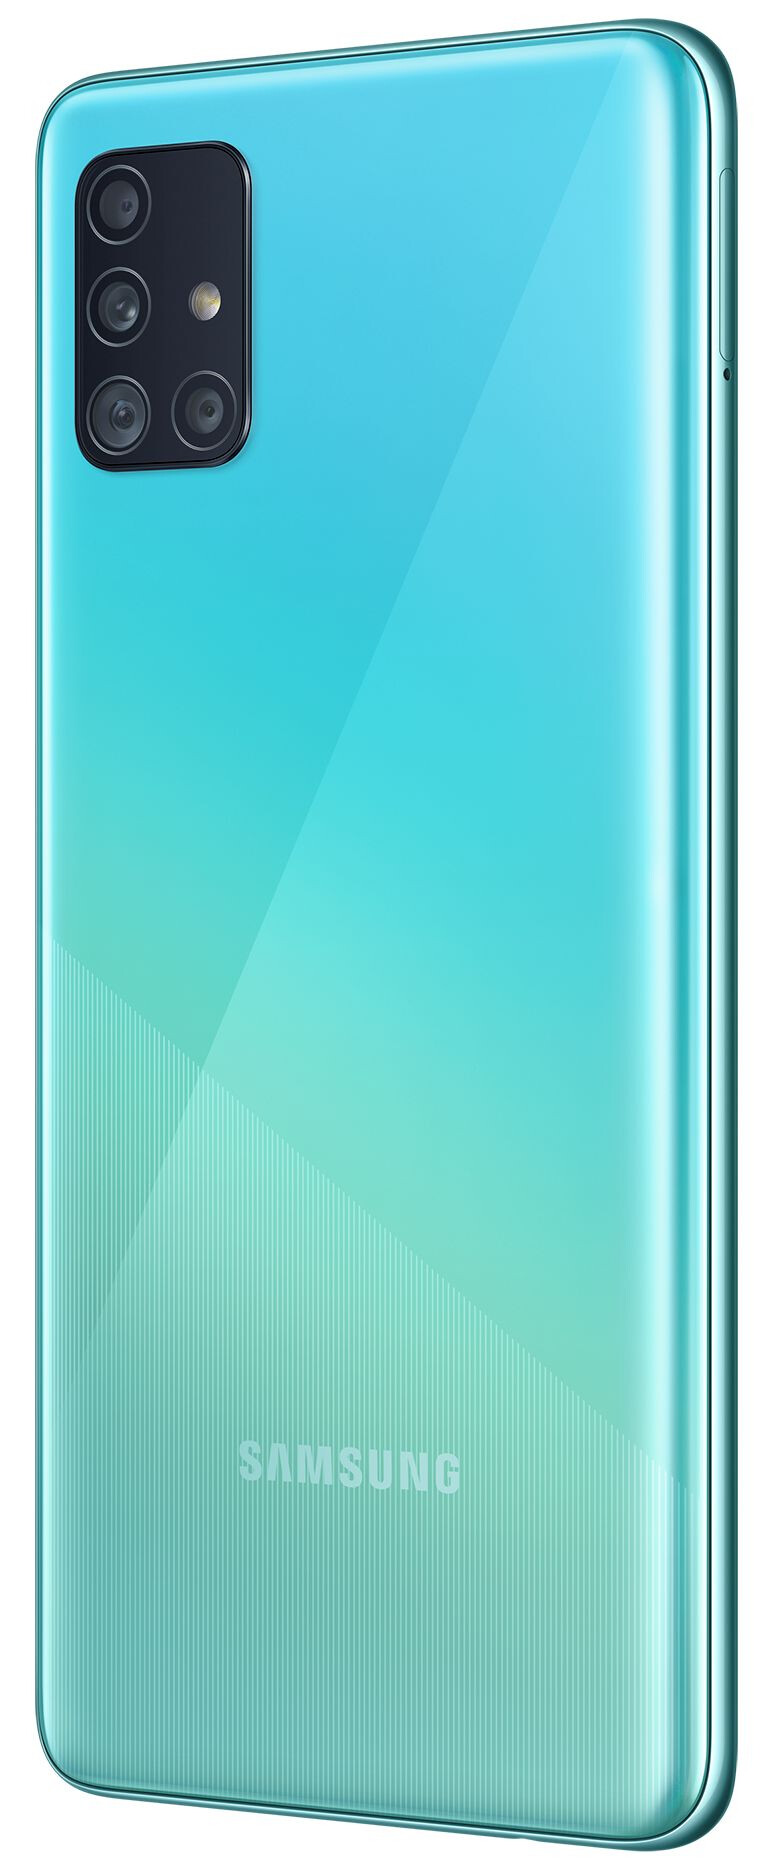 Смартфон Samsung Galaxy A51 4/64GB (ЕАС) Prism Crush Blue (Голубой)